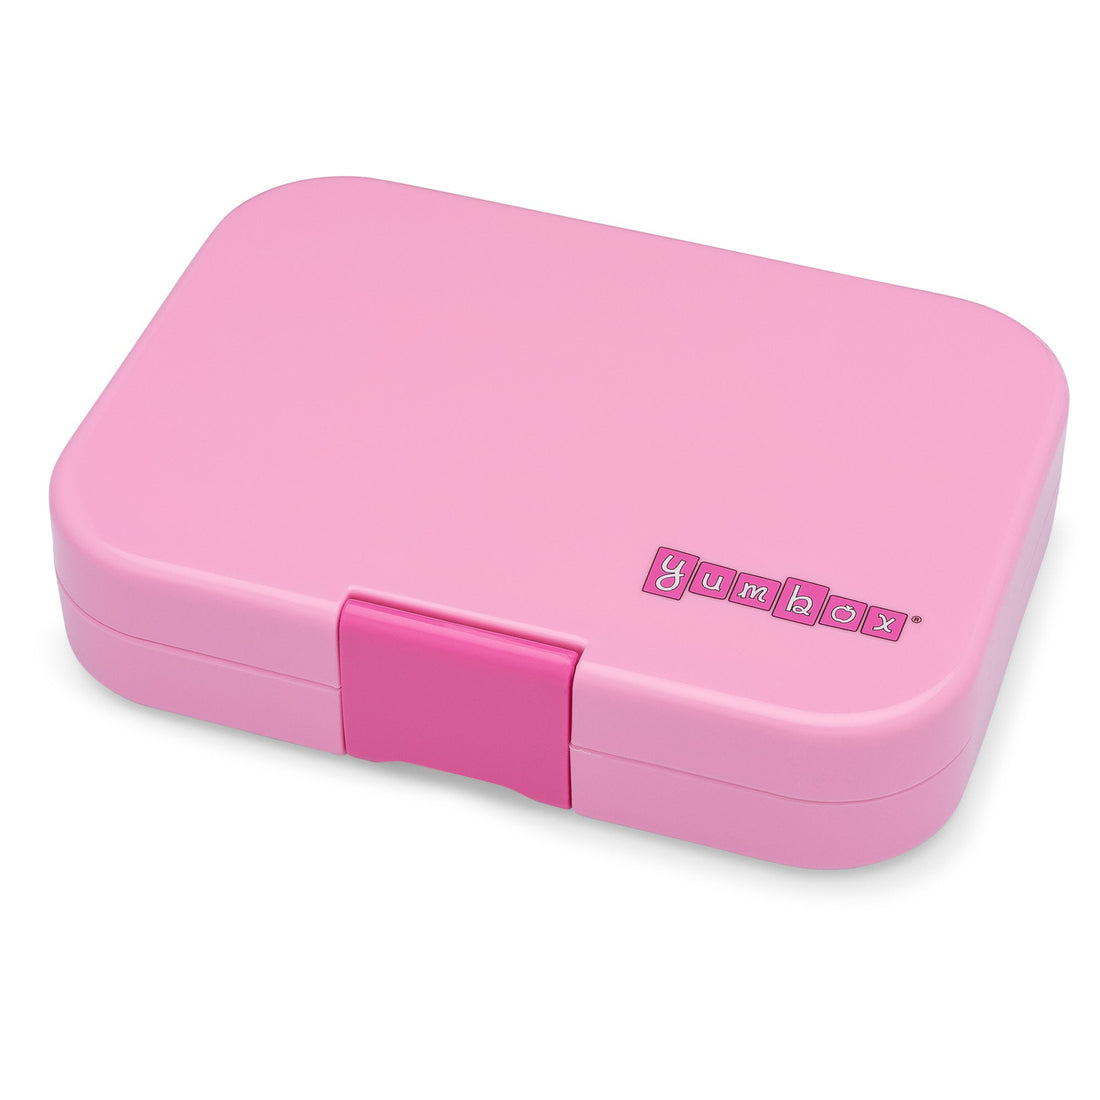 yumbox-original-6-compartment-lunch-box-power-pink-unicorn-yumb-ppi202010u- (2)